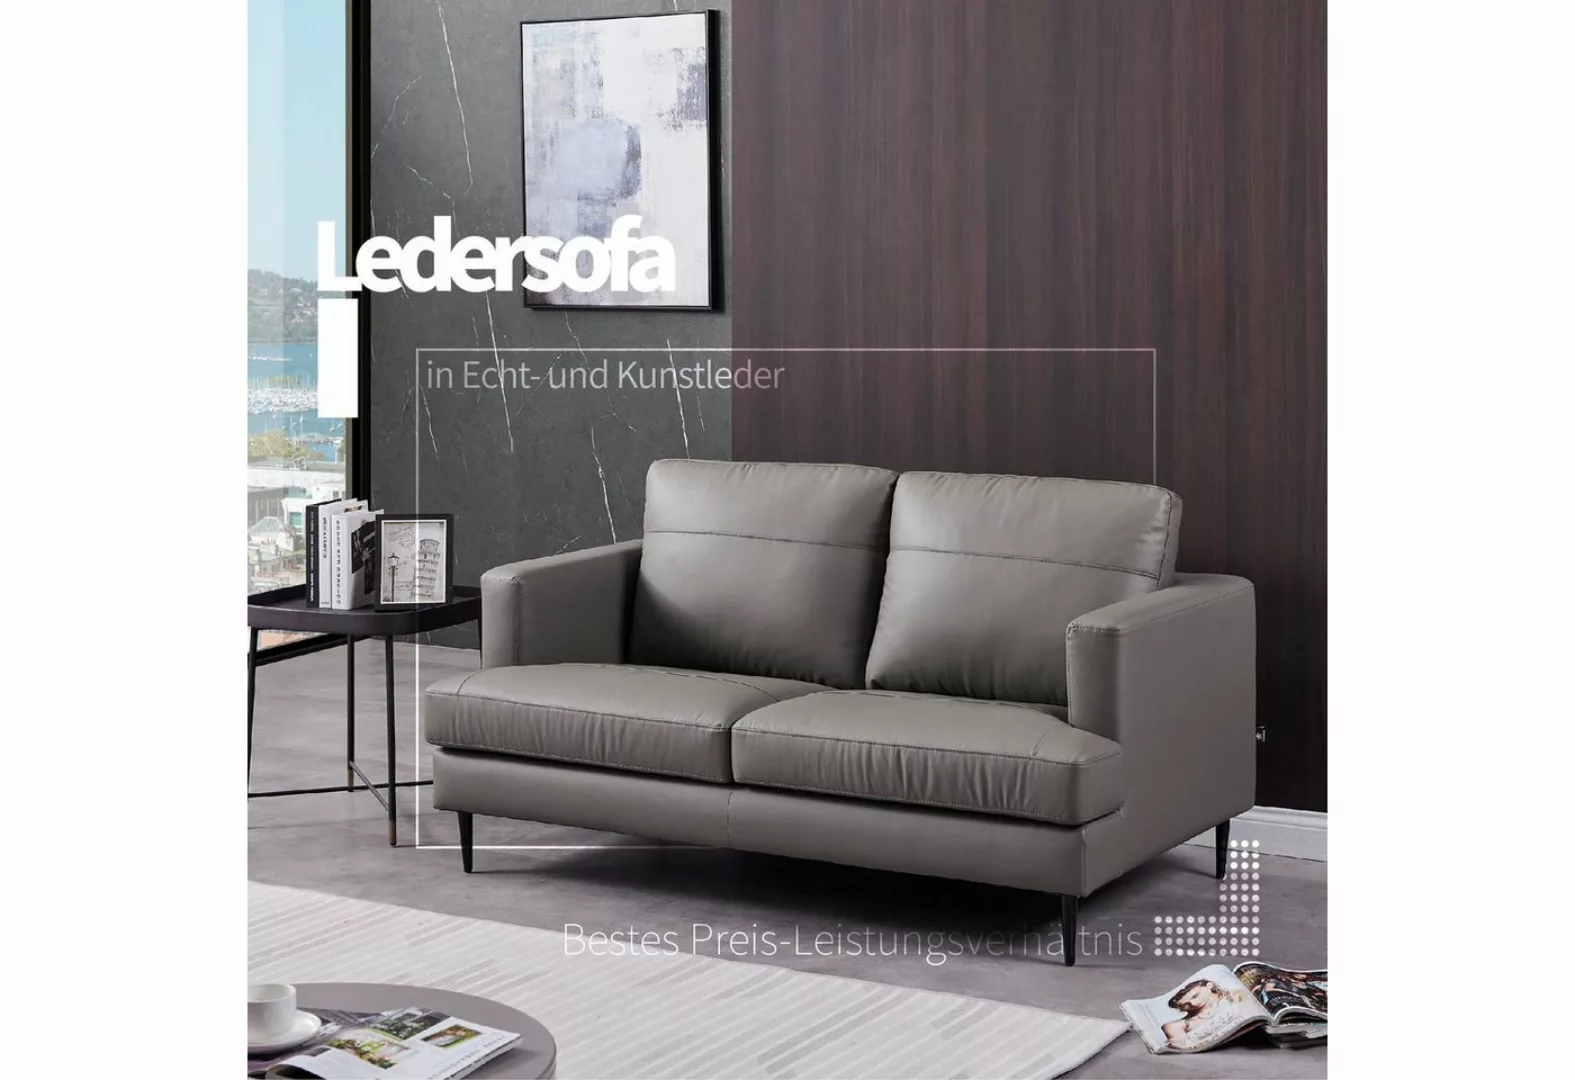 V6 Sofa Ledersofas S128, edel & elegant Design, Bestes Preis-Leistungsverhä günstig online kaufen